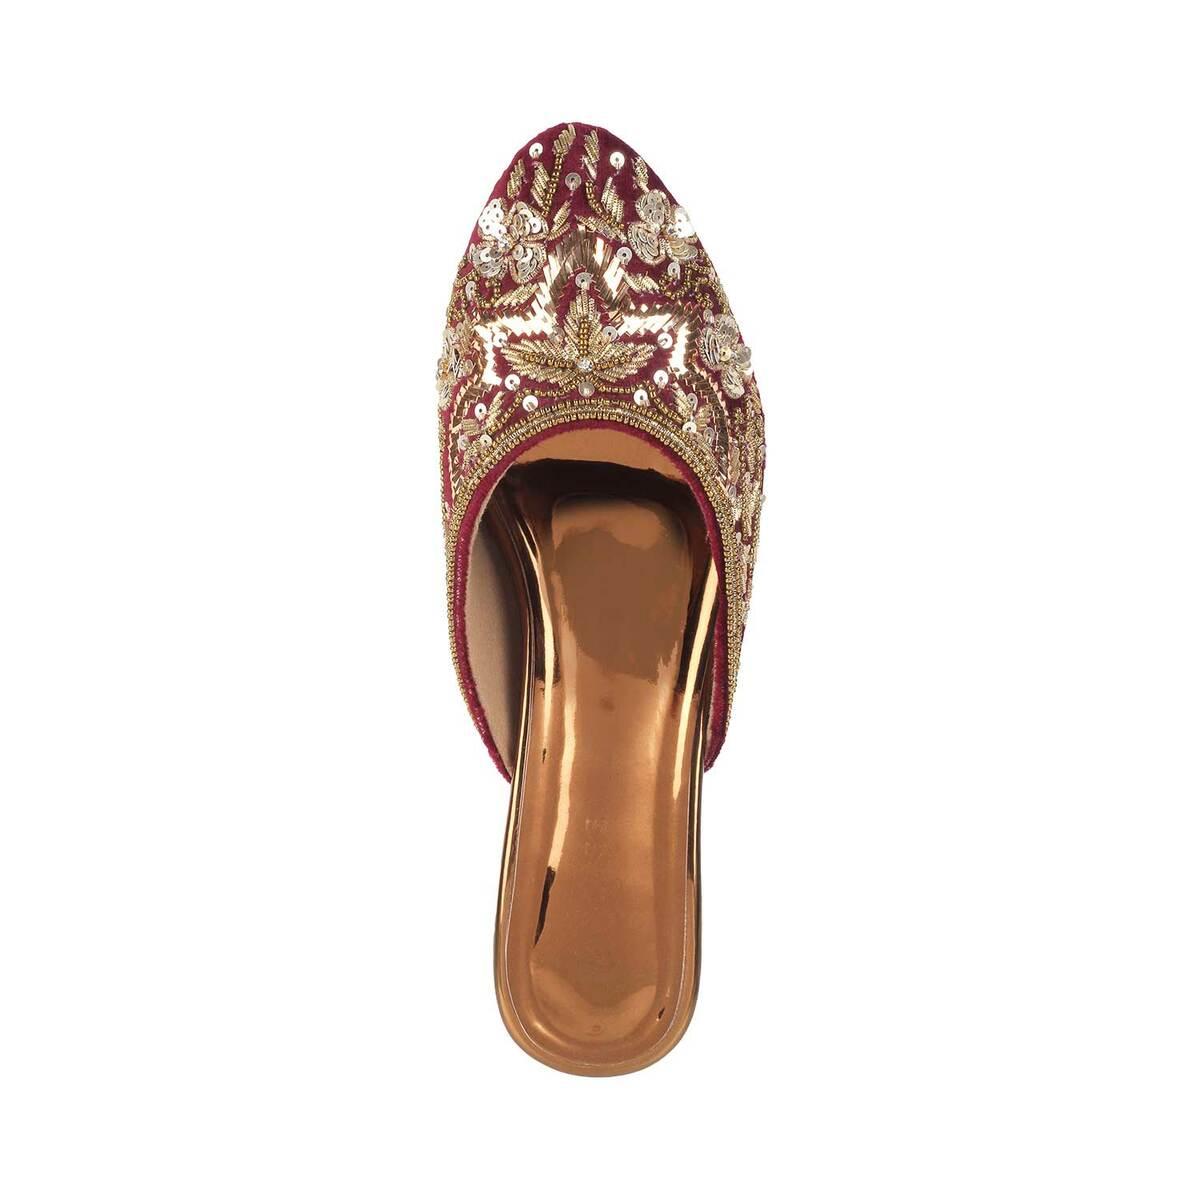 Ladies Wedge Heel Sandal at Rs 620/pair in Mumbai | ID: 2850361750148